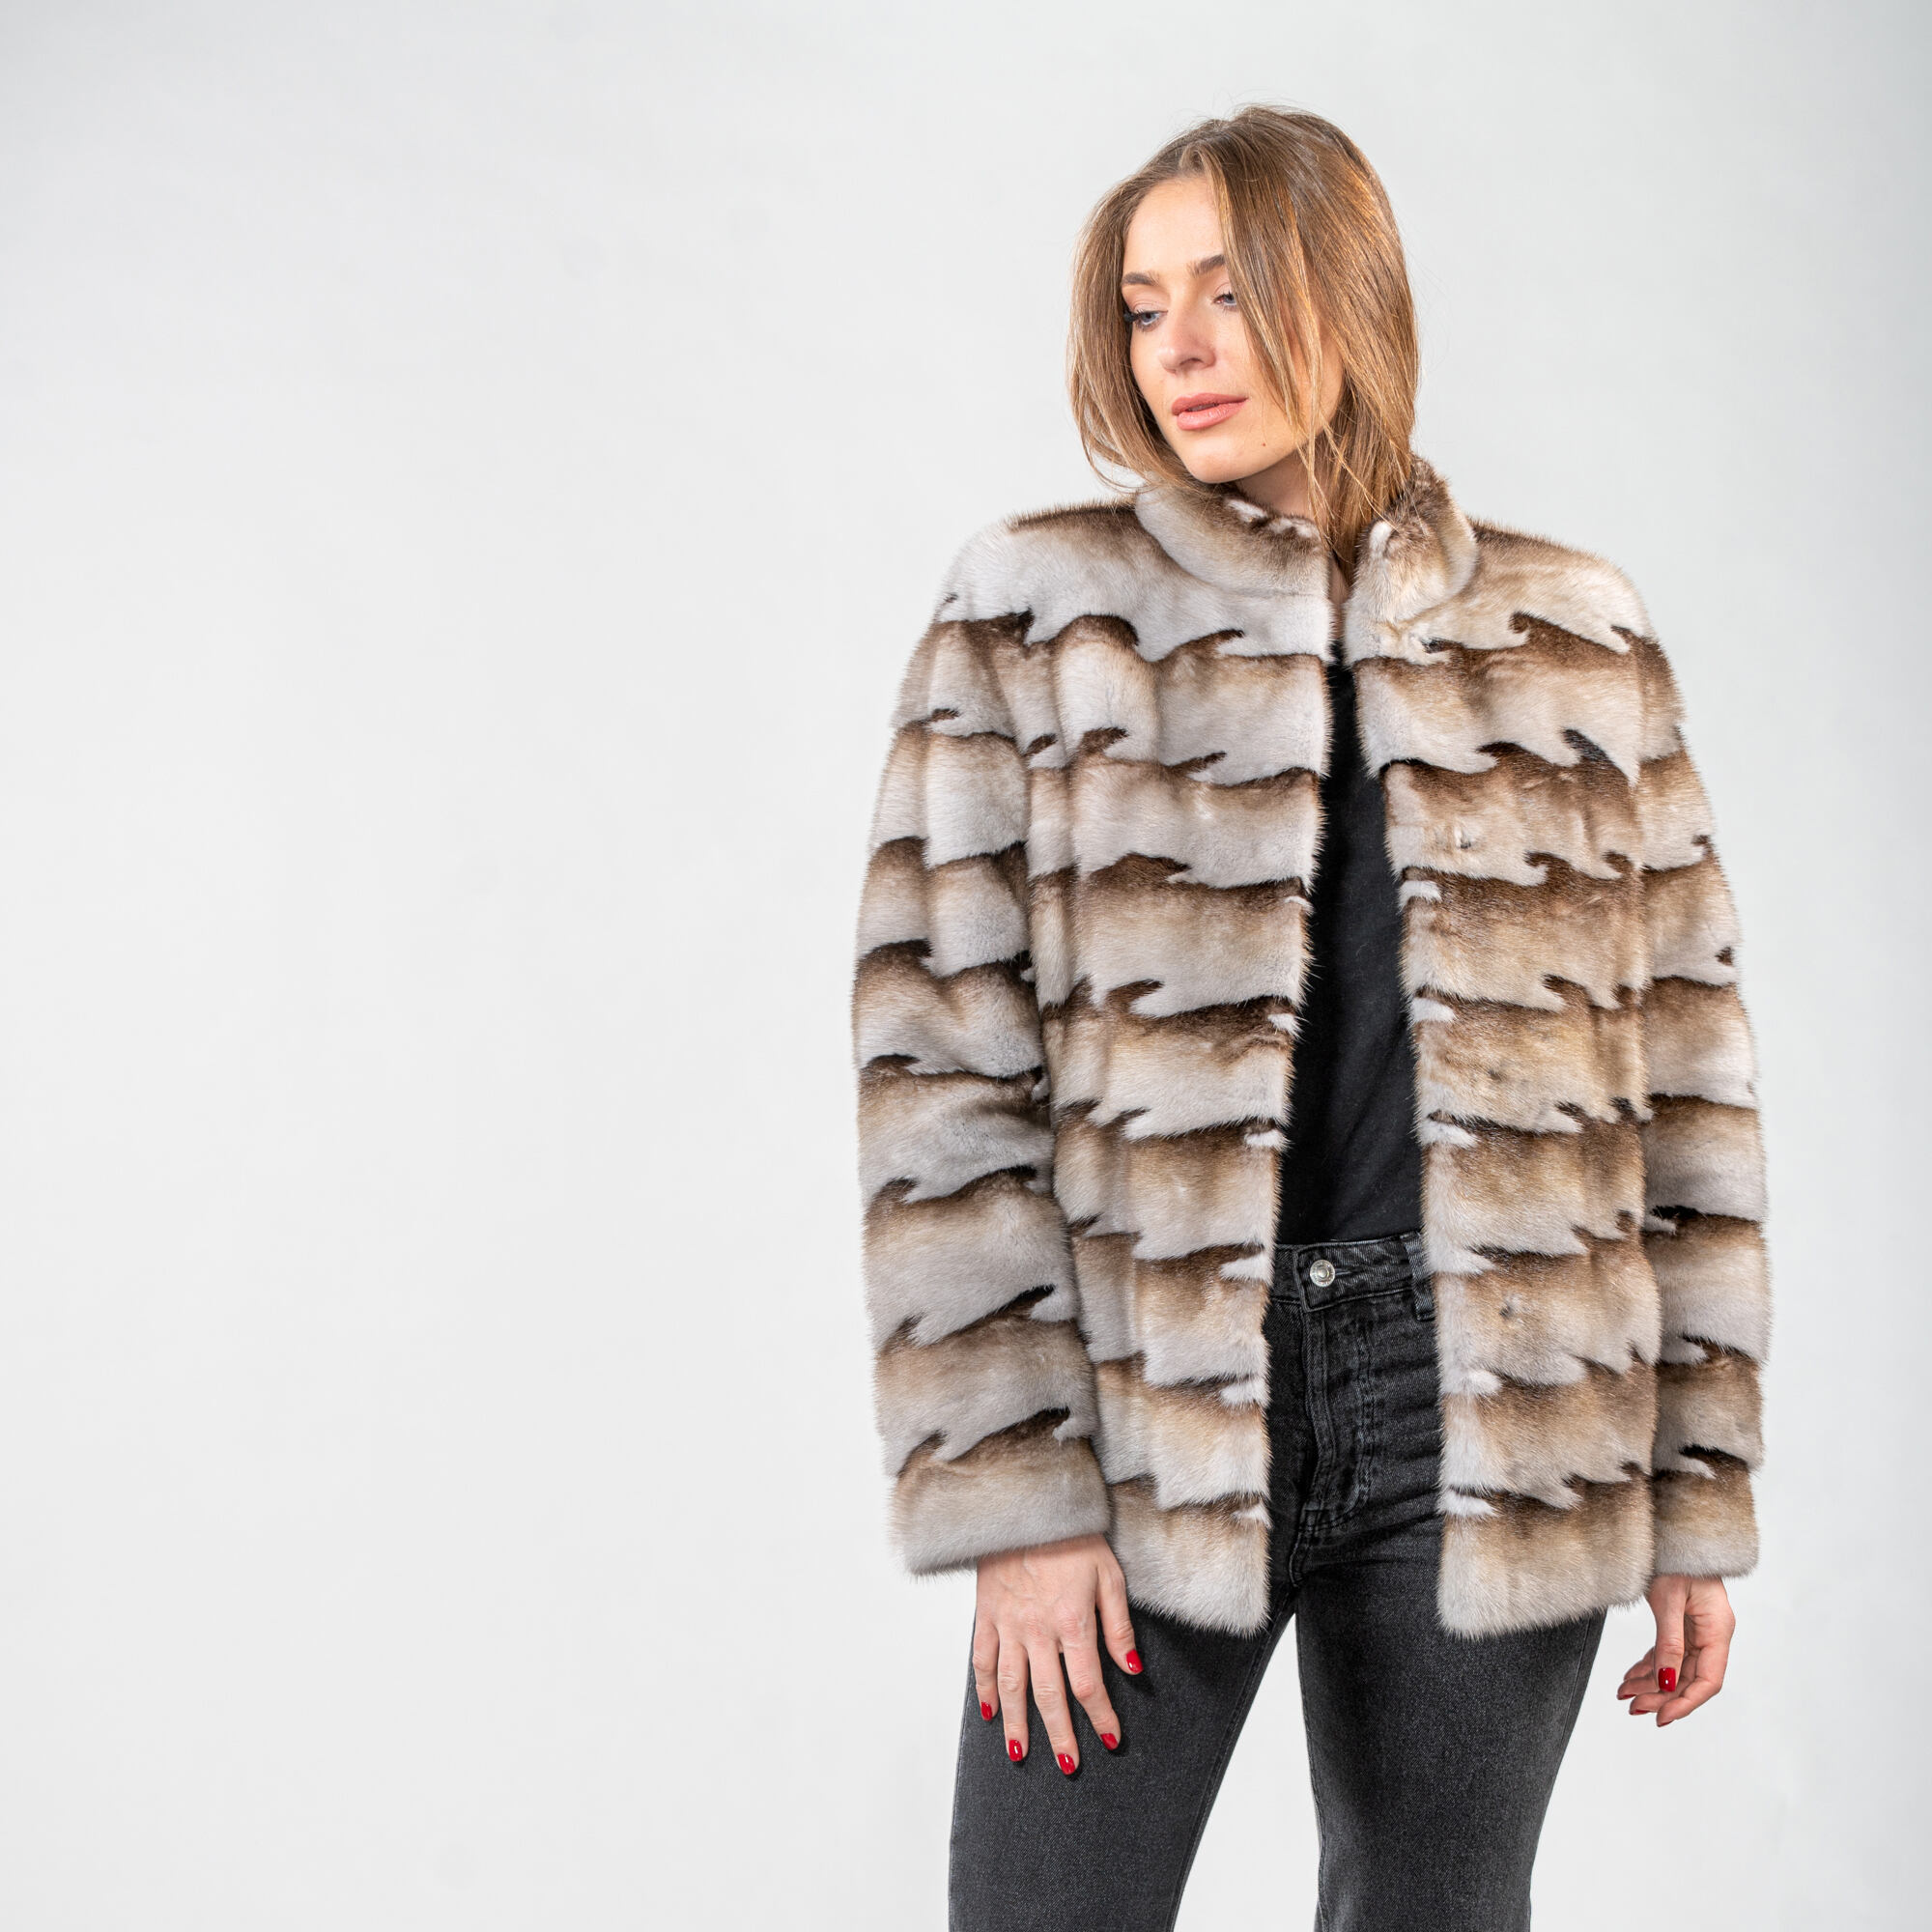 Mink fur jacket with brown stripes